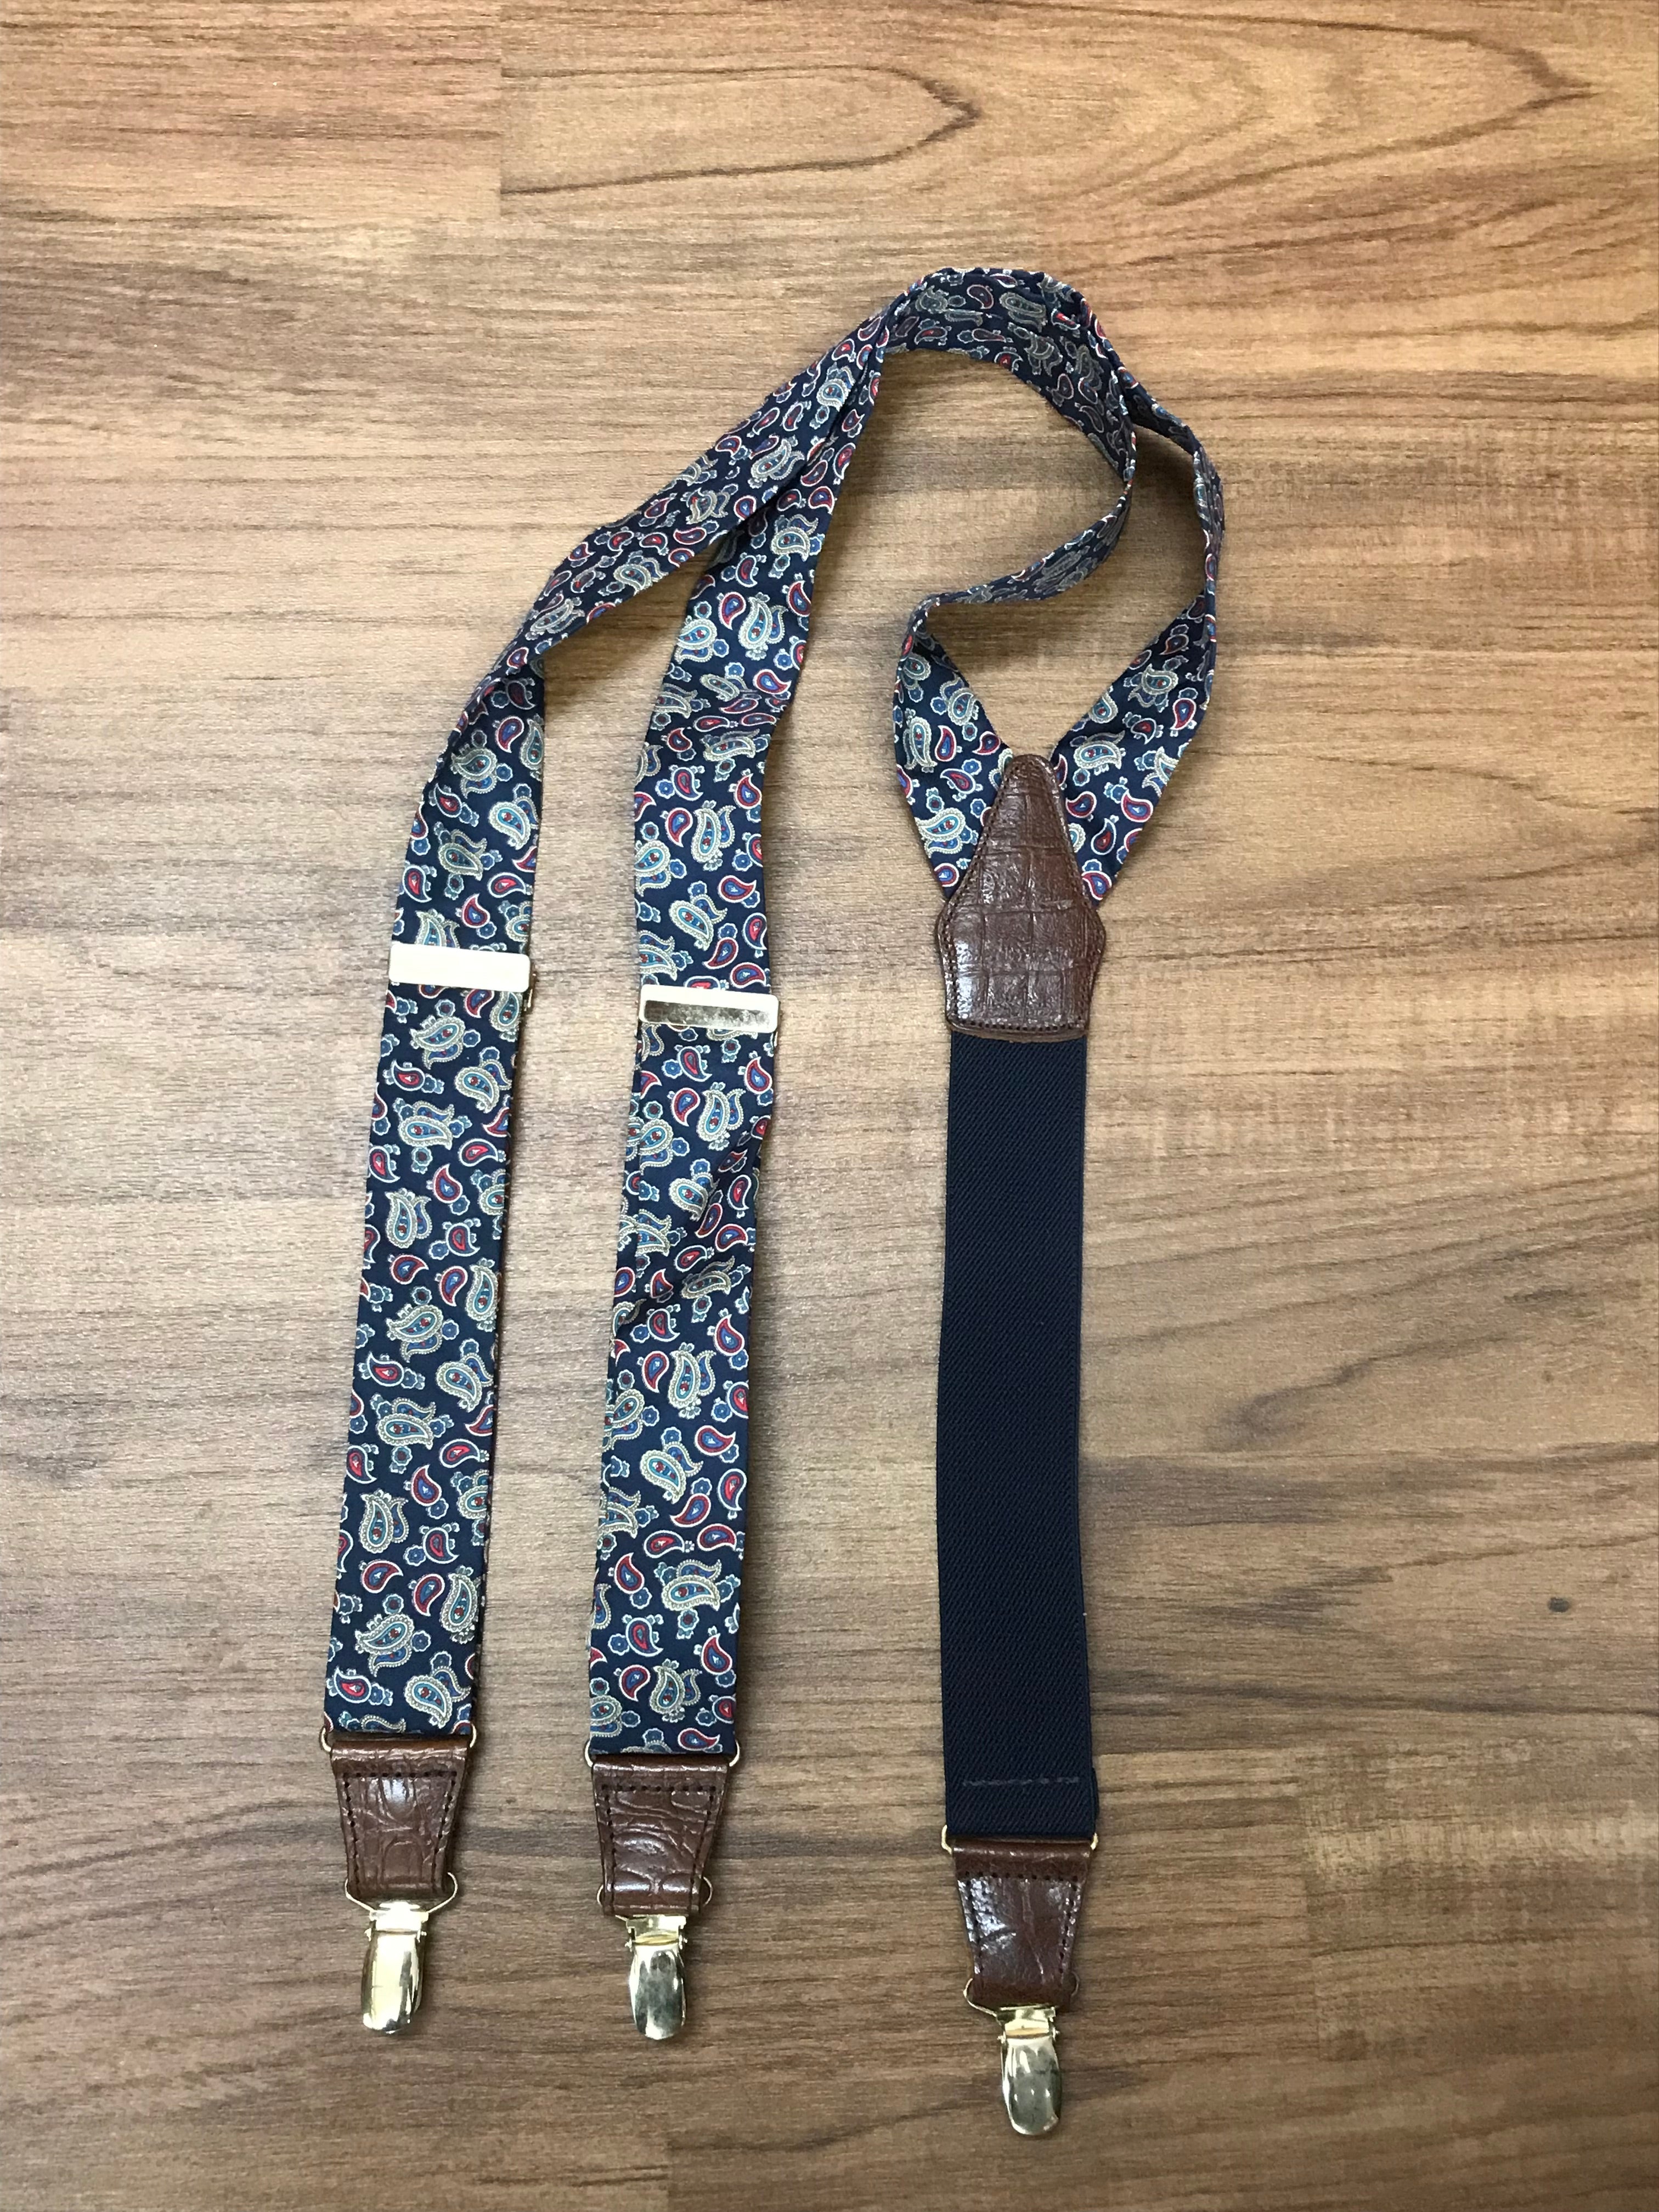 Hochwertige Hosenträger, Braces Made in England, Y-Form mit Clips im Paisley Muster